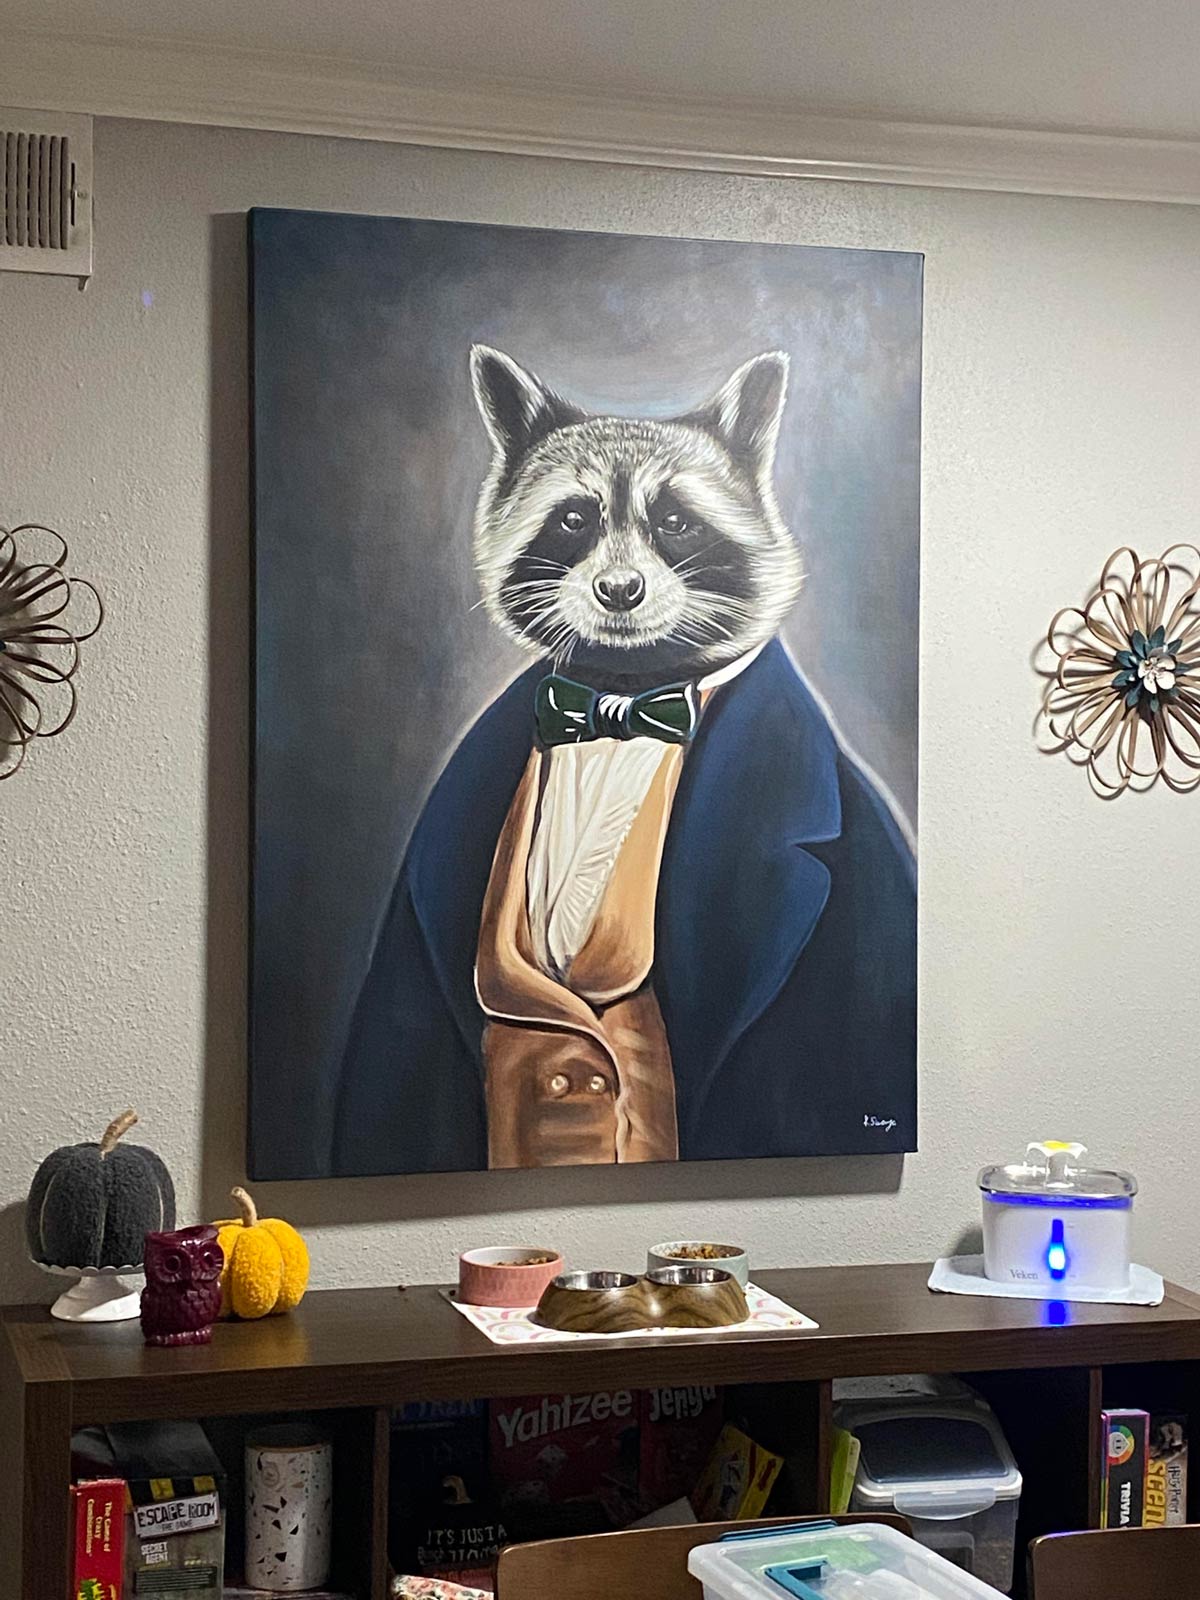 I have a large raccoon portrait